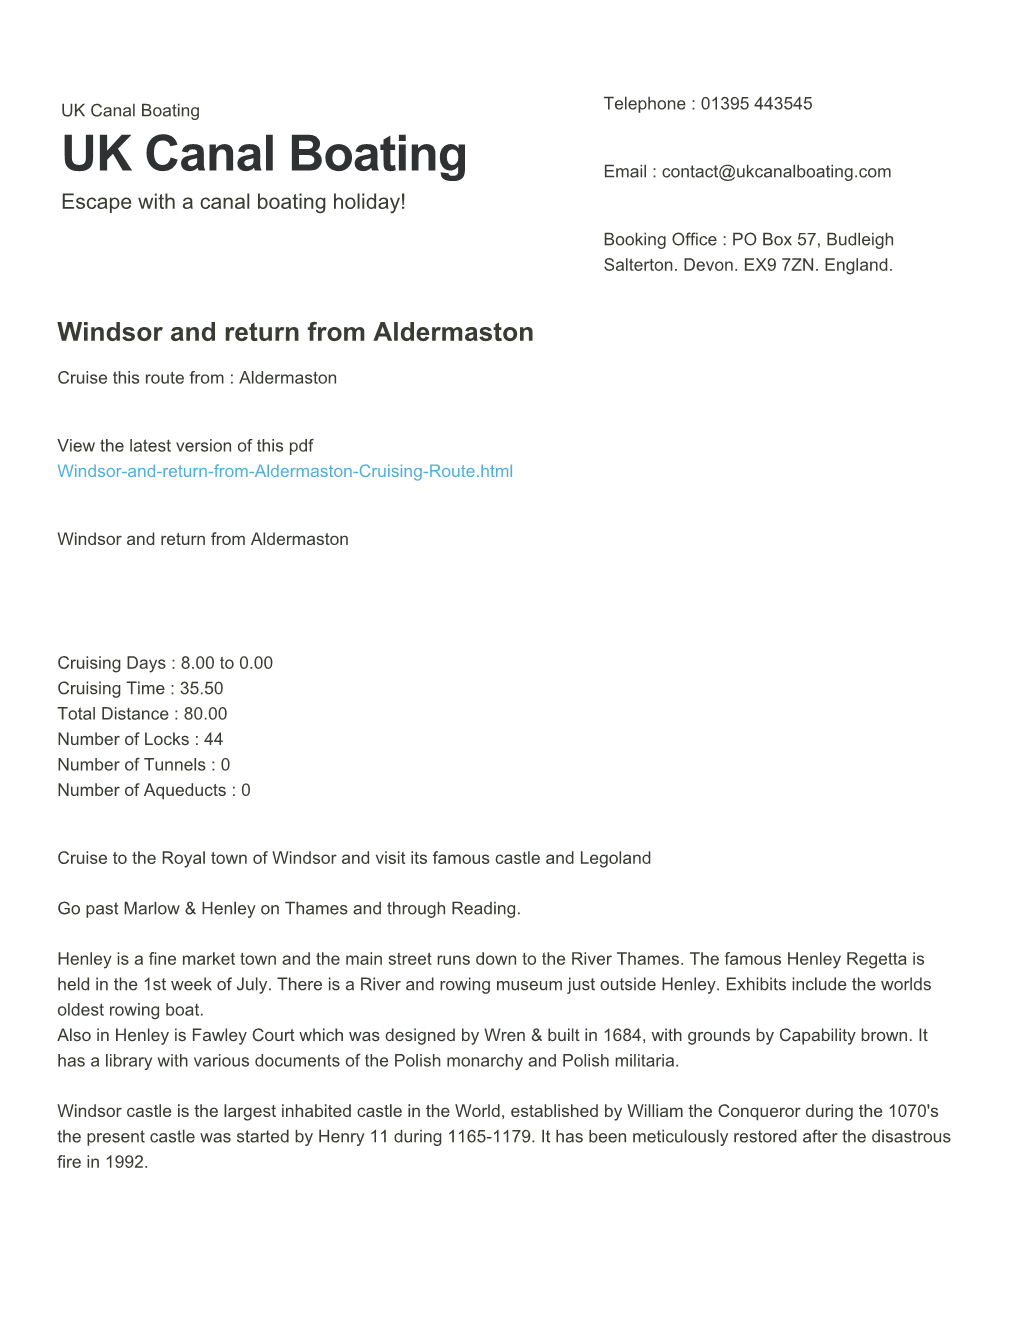 Windsor and Return from Aldermaston | UK Canal Boating